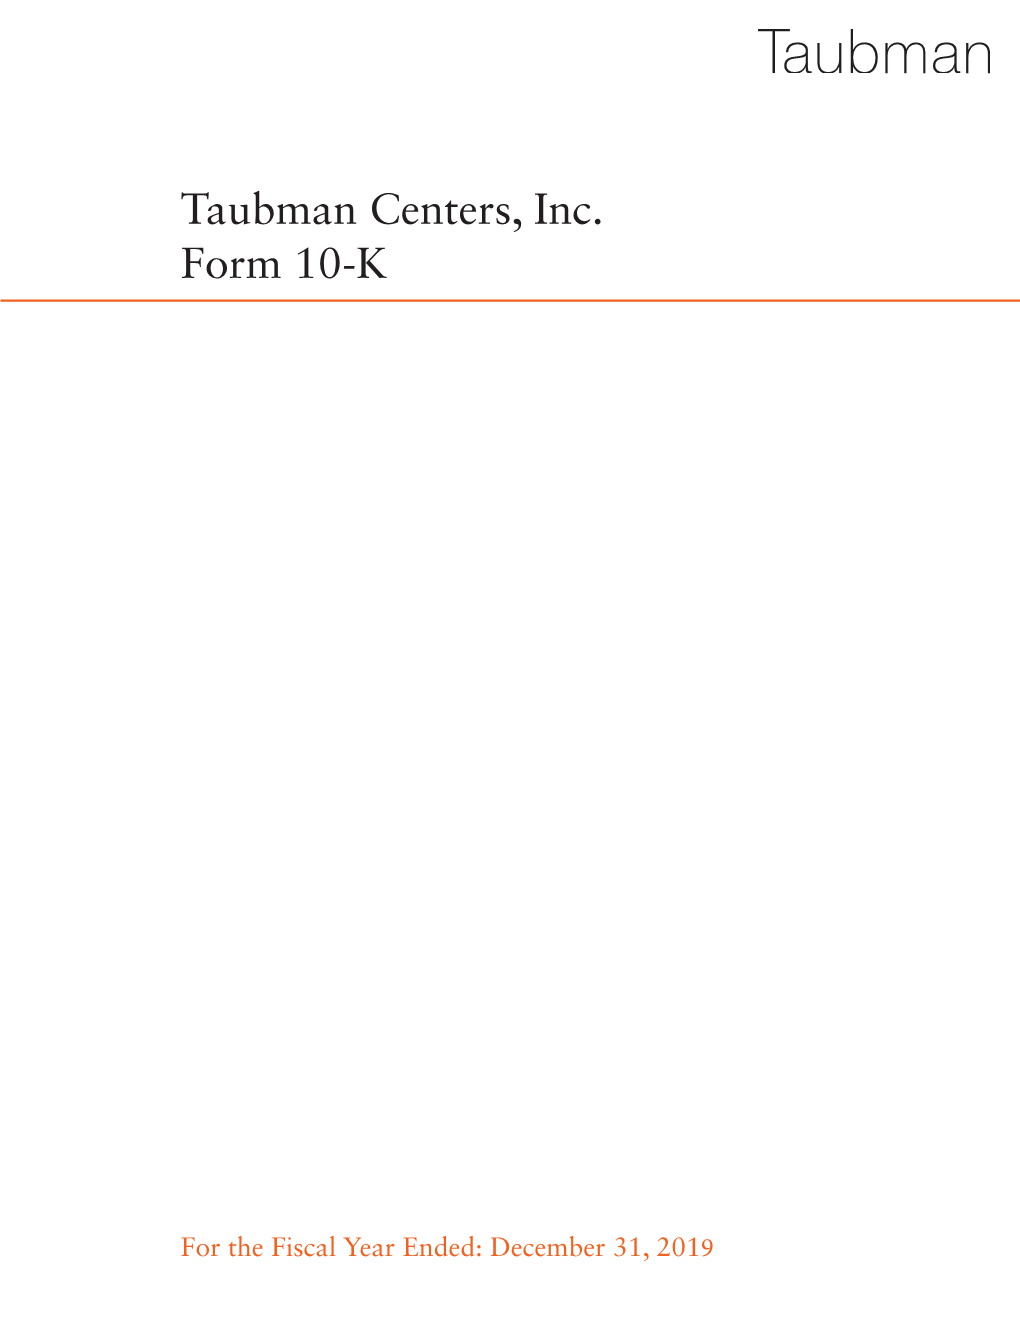 Taubman Centers, Inc. Form 10-K